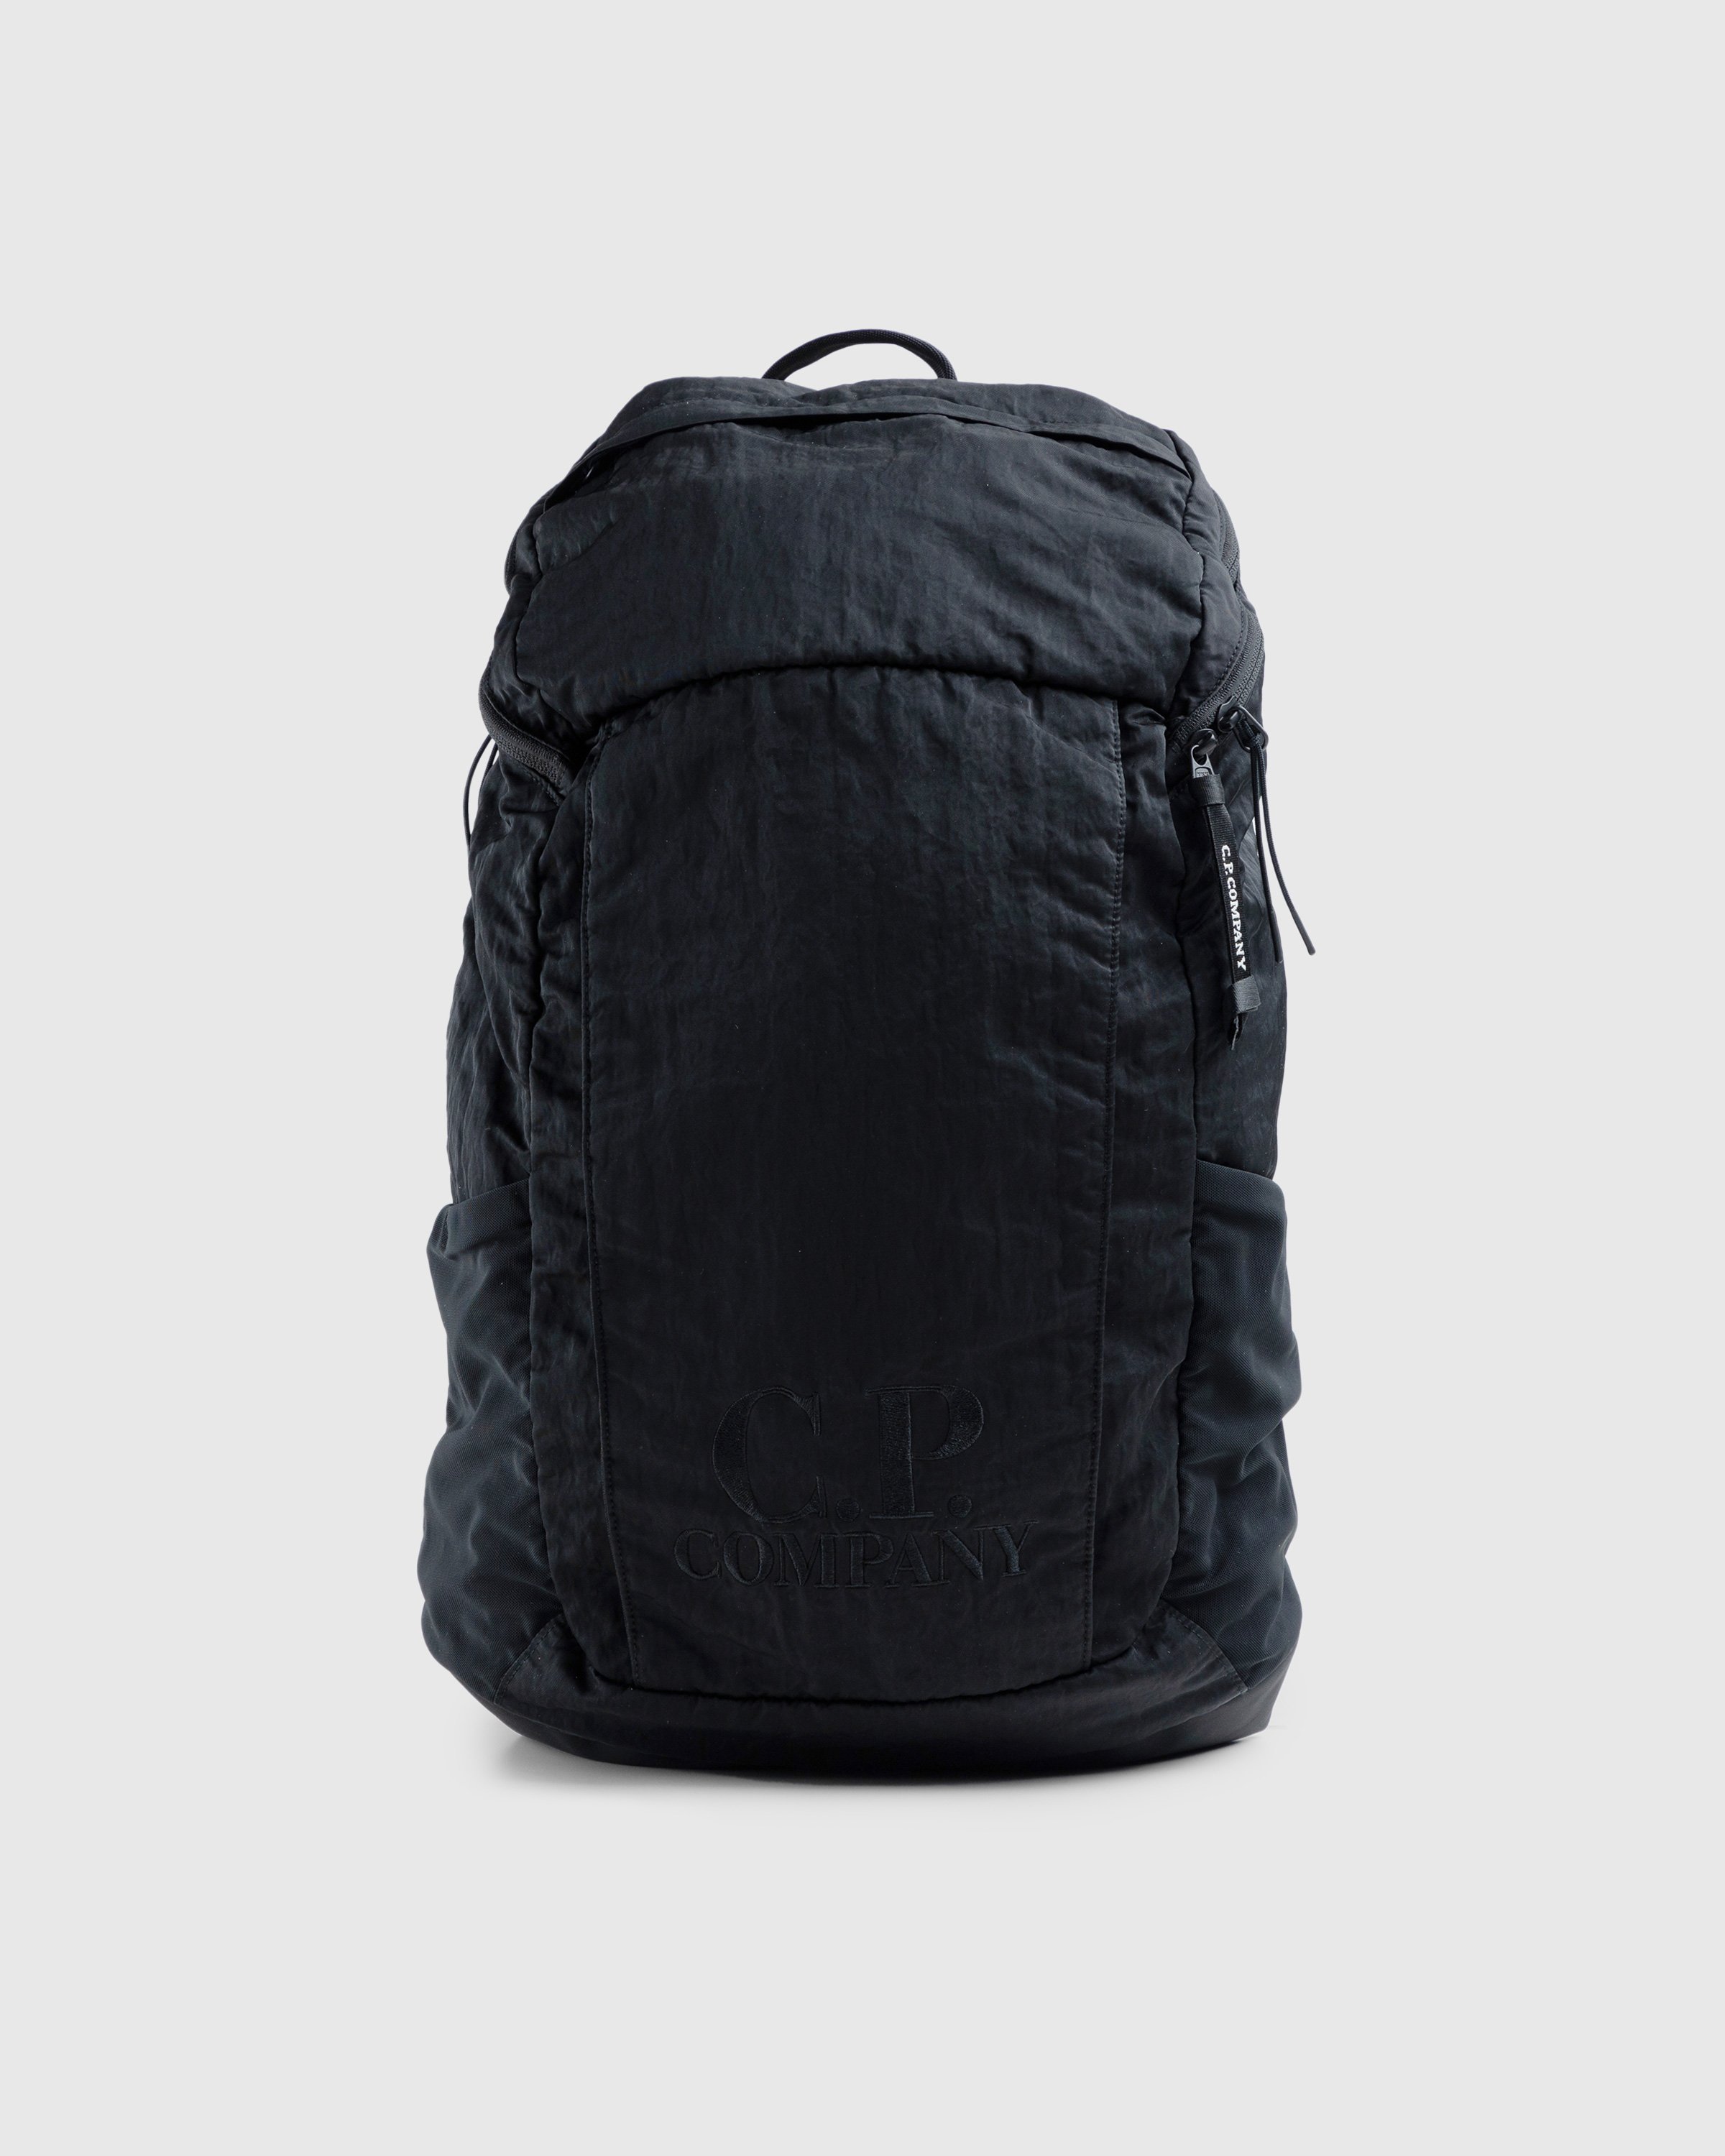 C.P. Company - Nylon B Backpack Black - Accessories - Black - Image 1